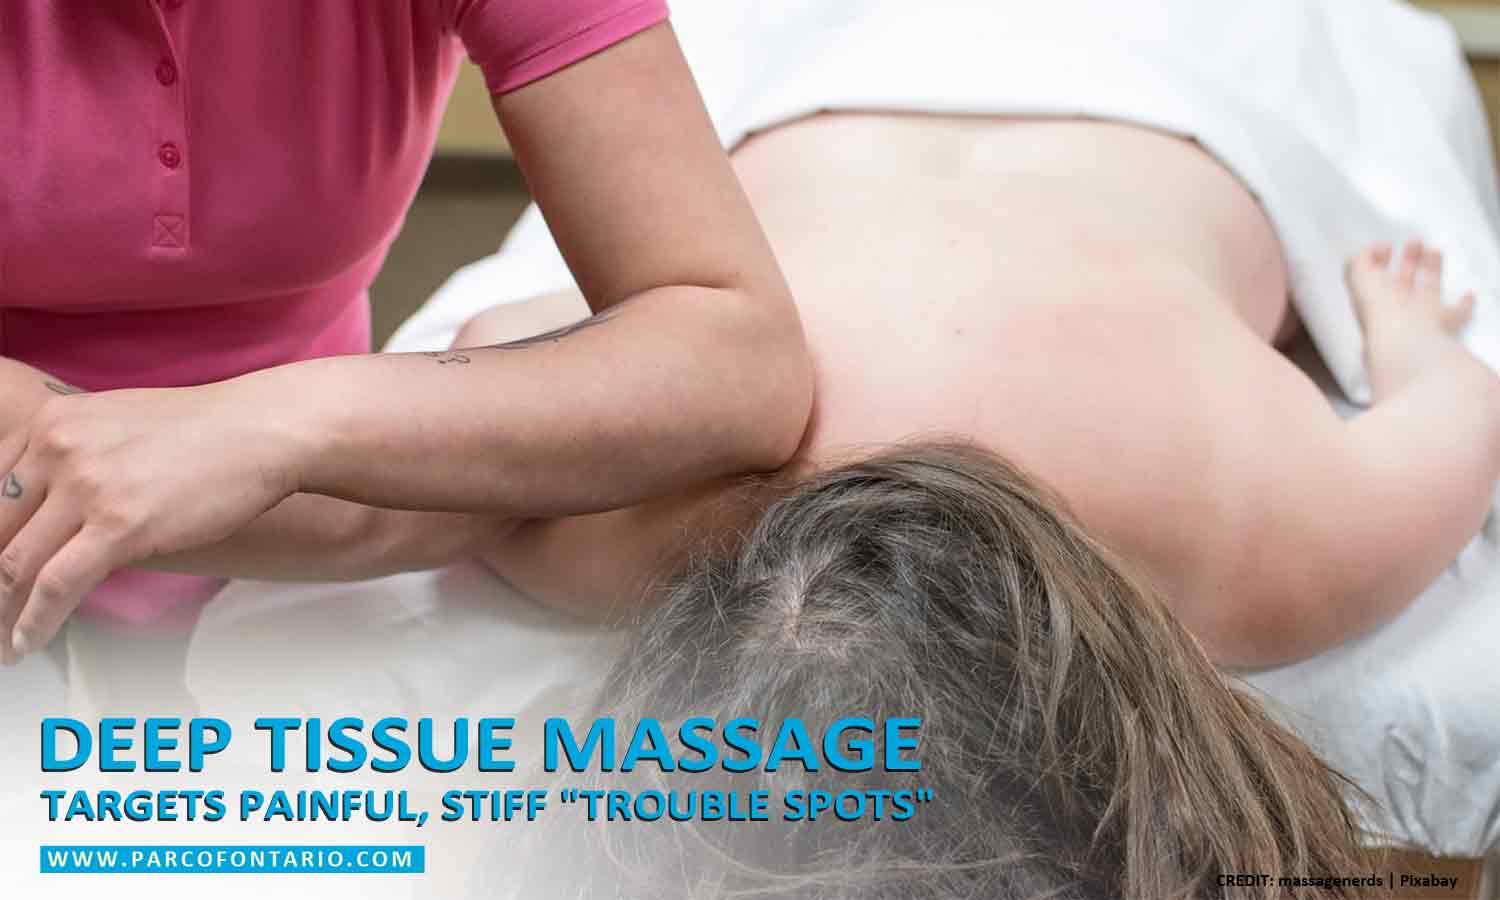 https://www.parcofontario.com/wp-content/uploads/2021/02/Deep-tissue-massage-targets-painful-stiff-trouble-spots.jpg